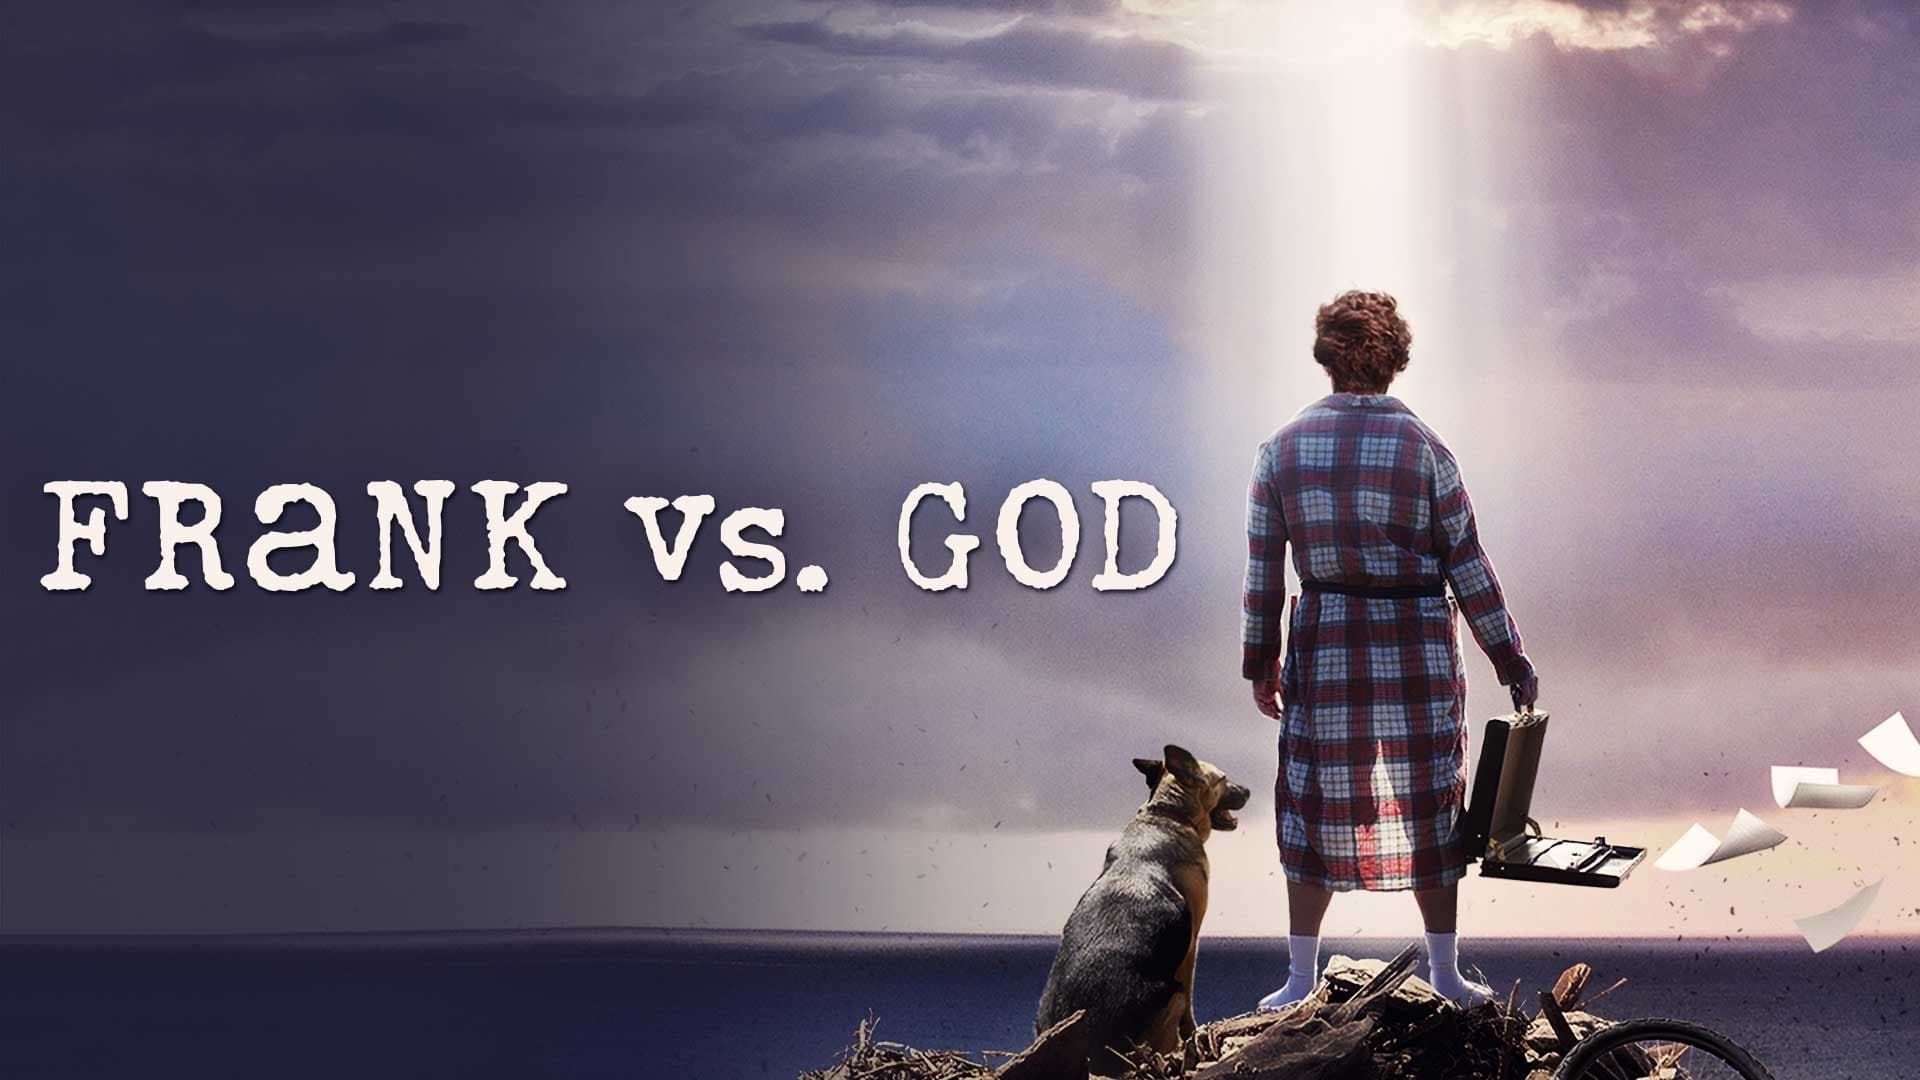 Frank vs. God background